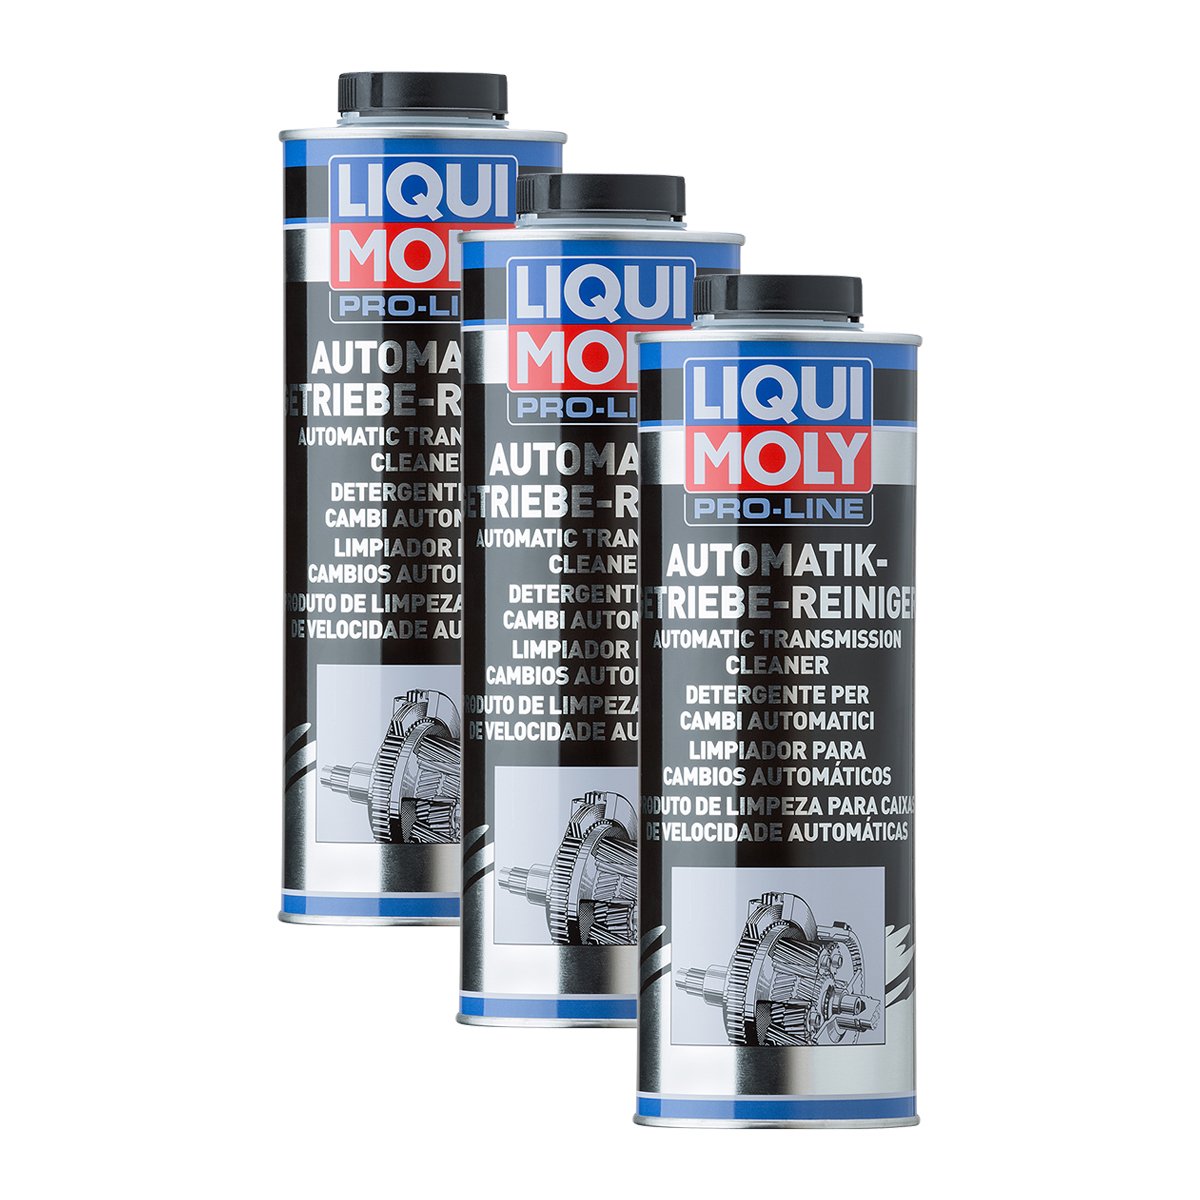 3x LIQUI MOLY 5101 Pro-Line Automatik-Getriebe-Reiniger 1L von LIQUI-MOLY_bundle